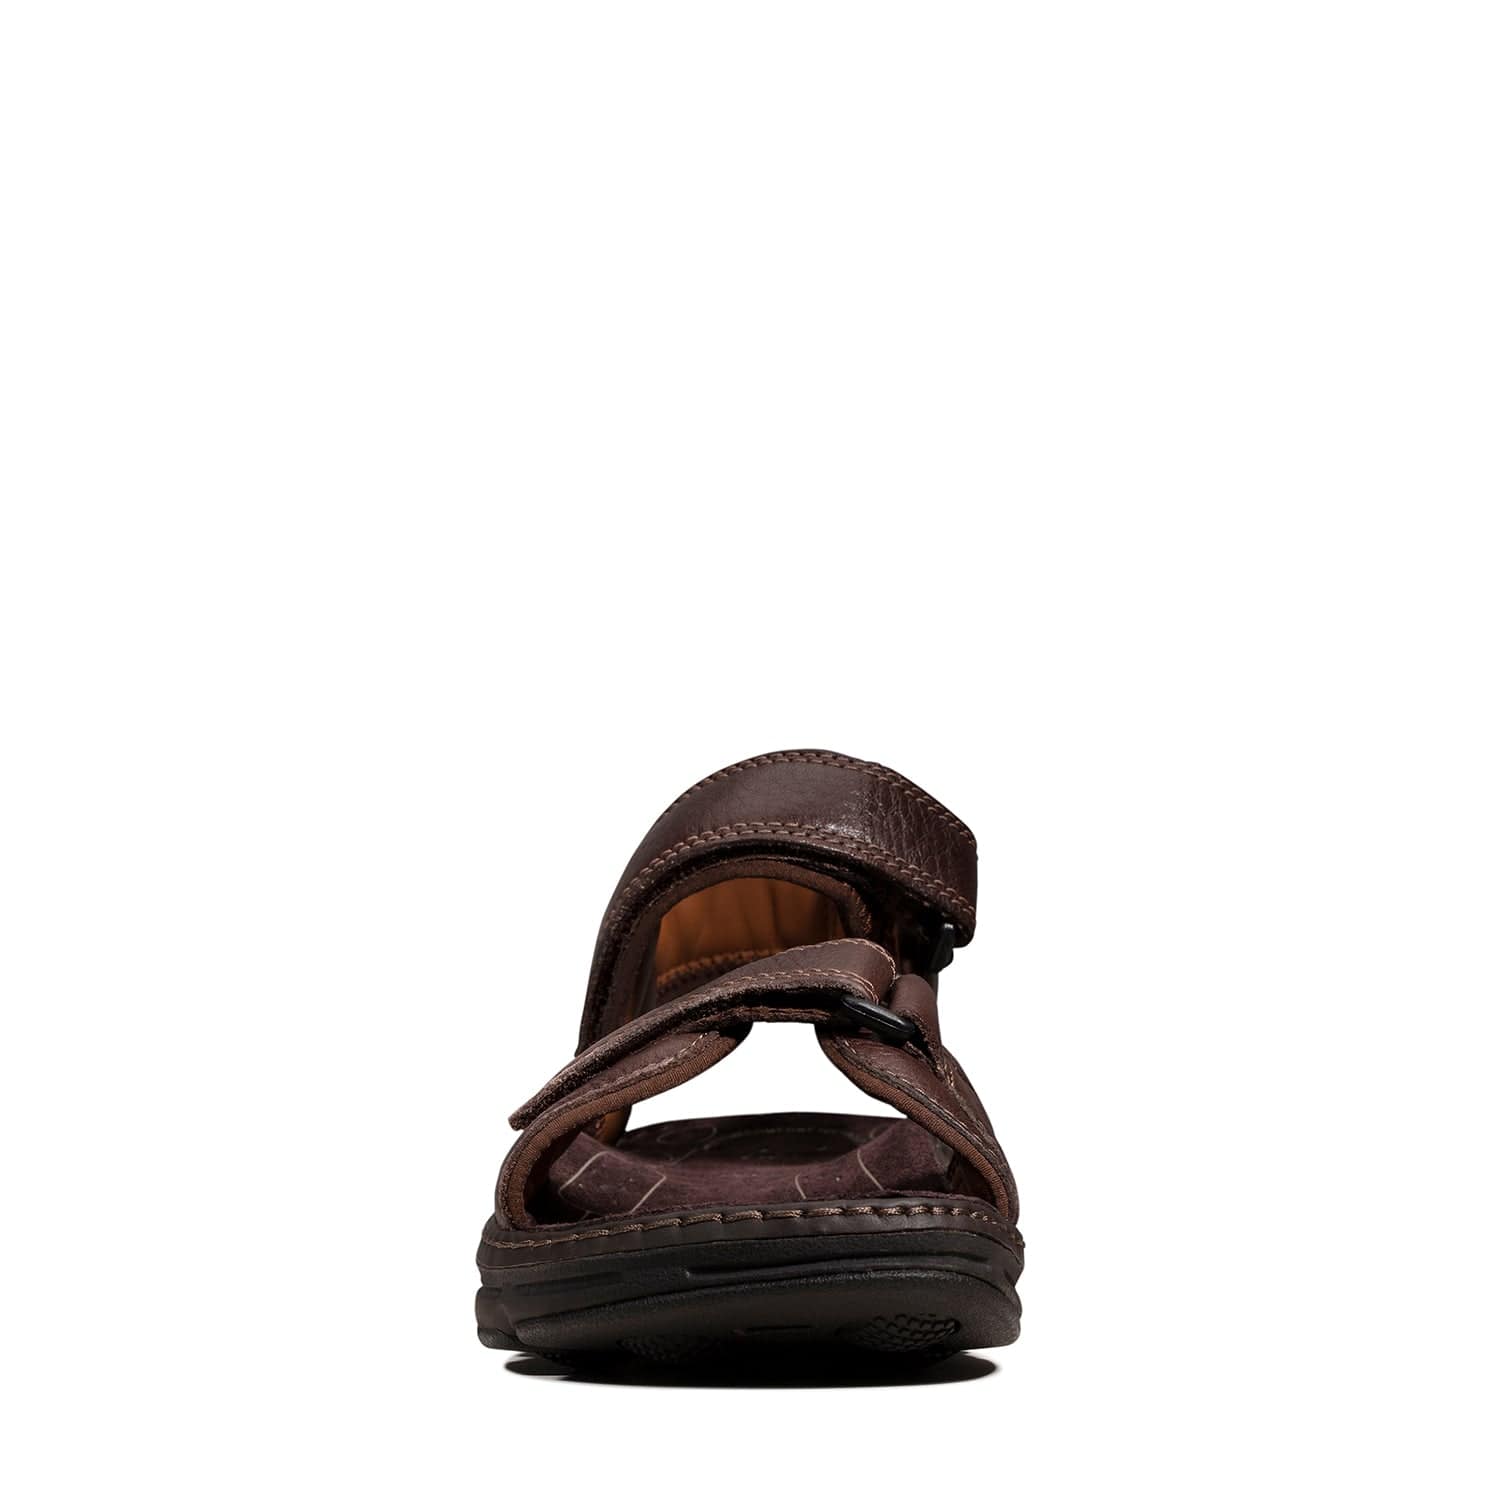 Clarks Atl Part - Sandals - Dark Brown Lea - 203531967 - G Width (Standard Fit)